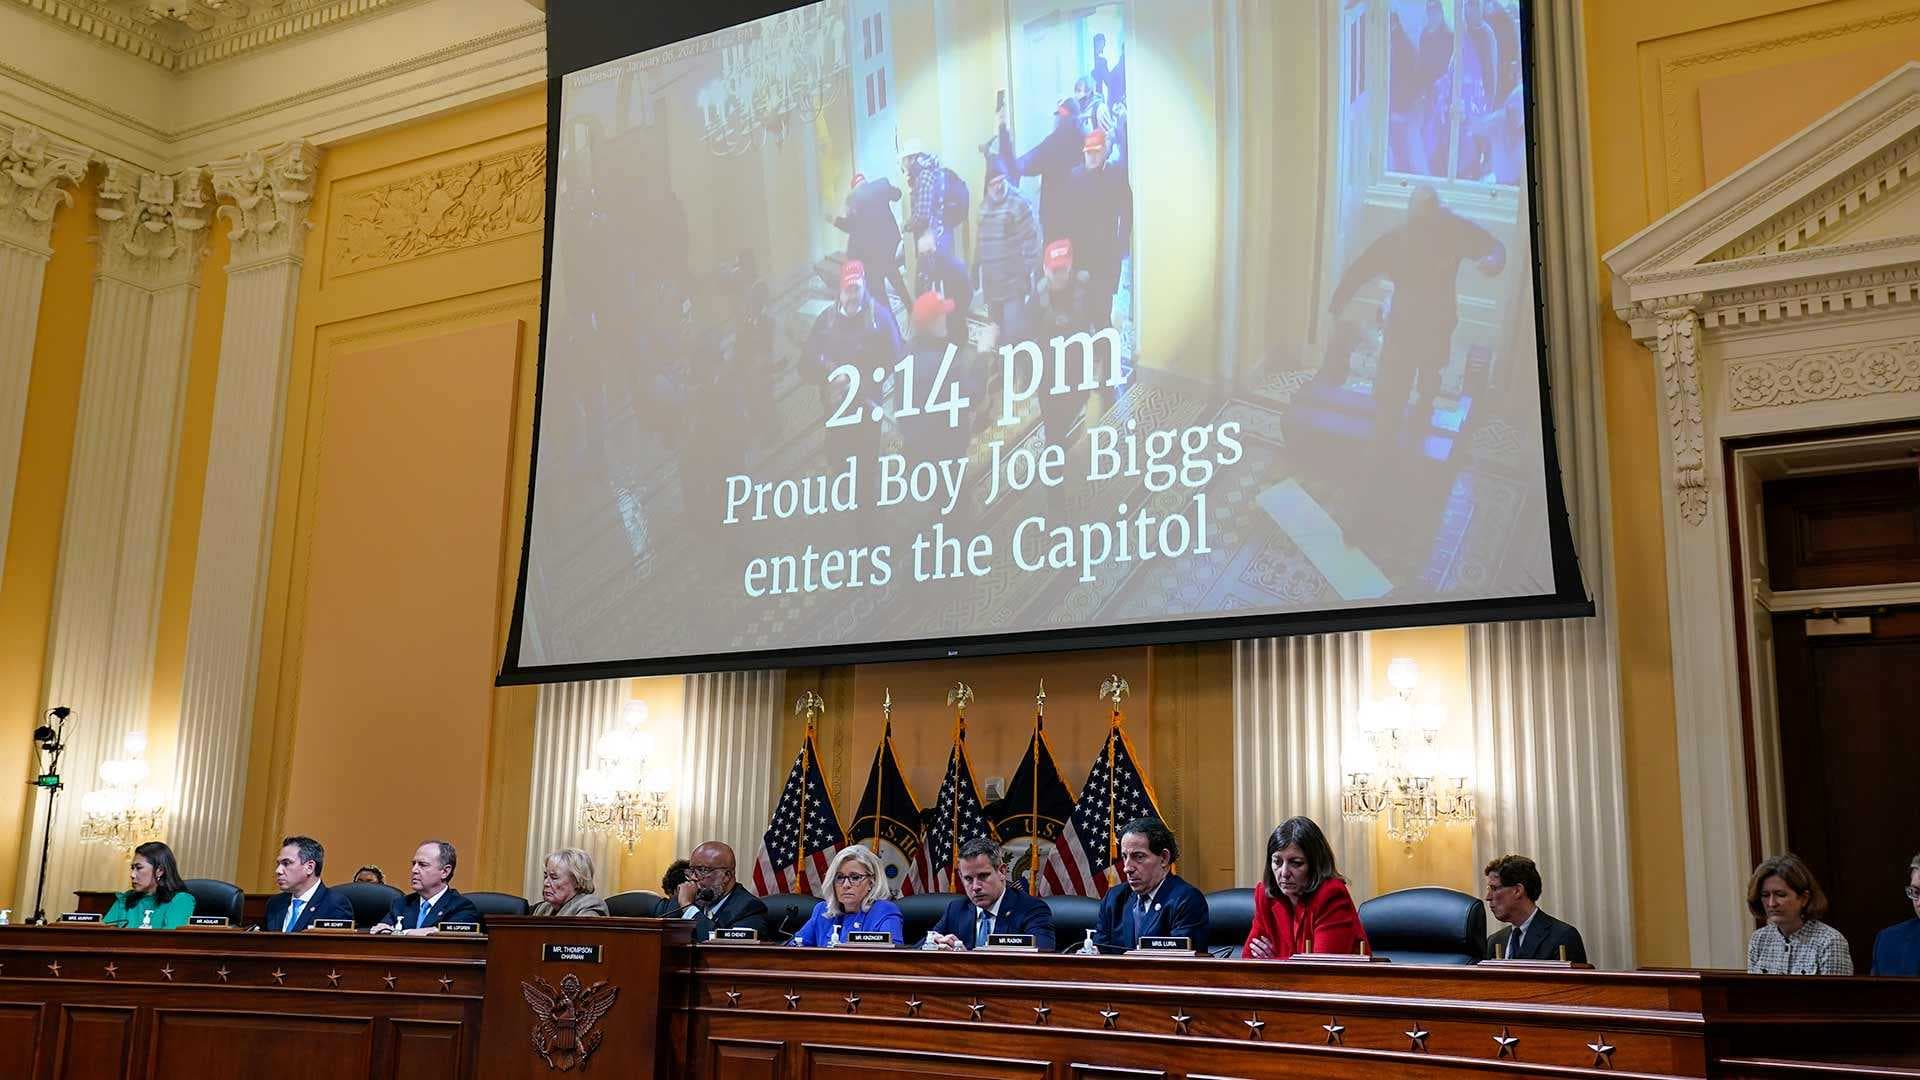 Video at the Jan. 6 hearings reads "2:14 p.m. Proud Boy Joe Biggs enters the Capitol"